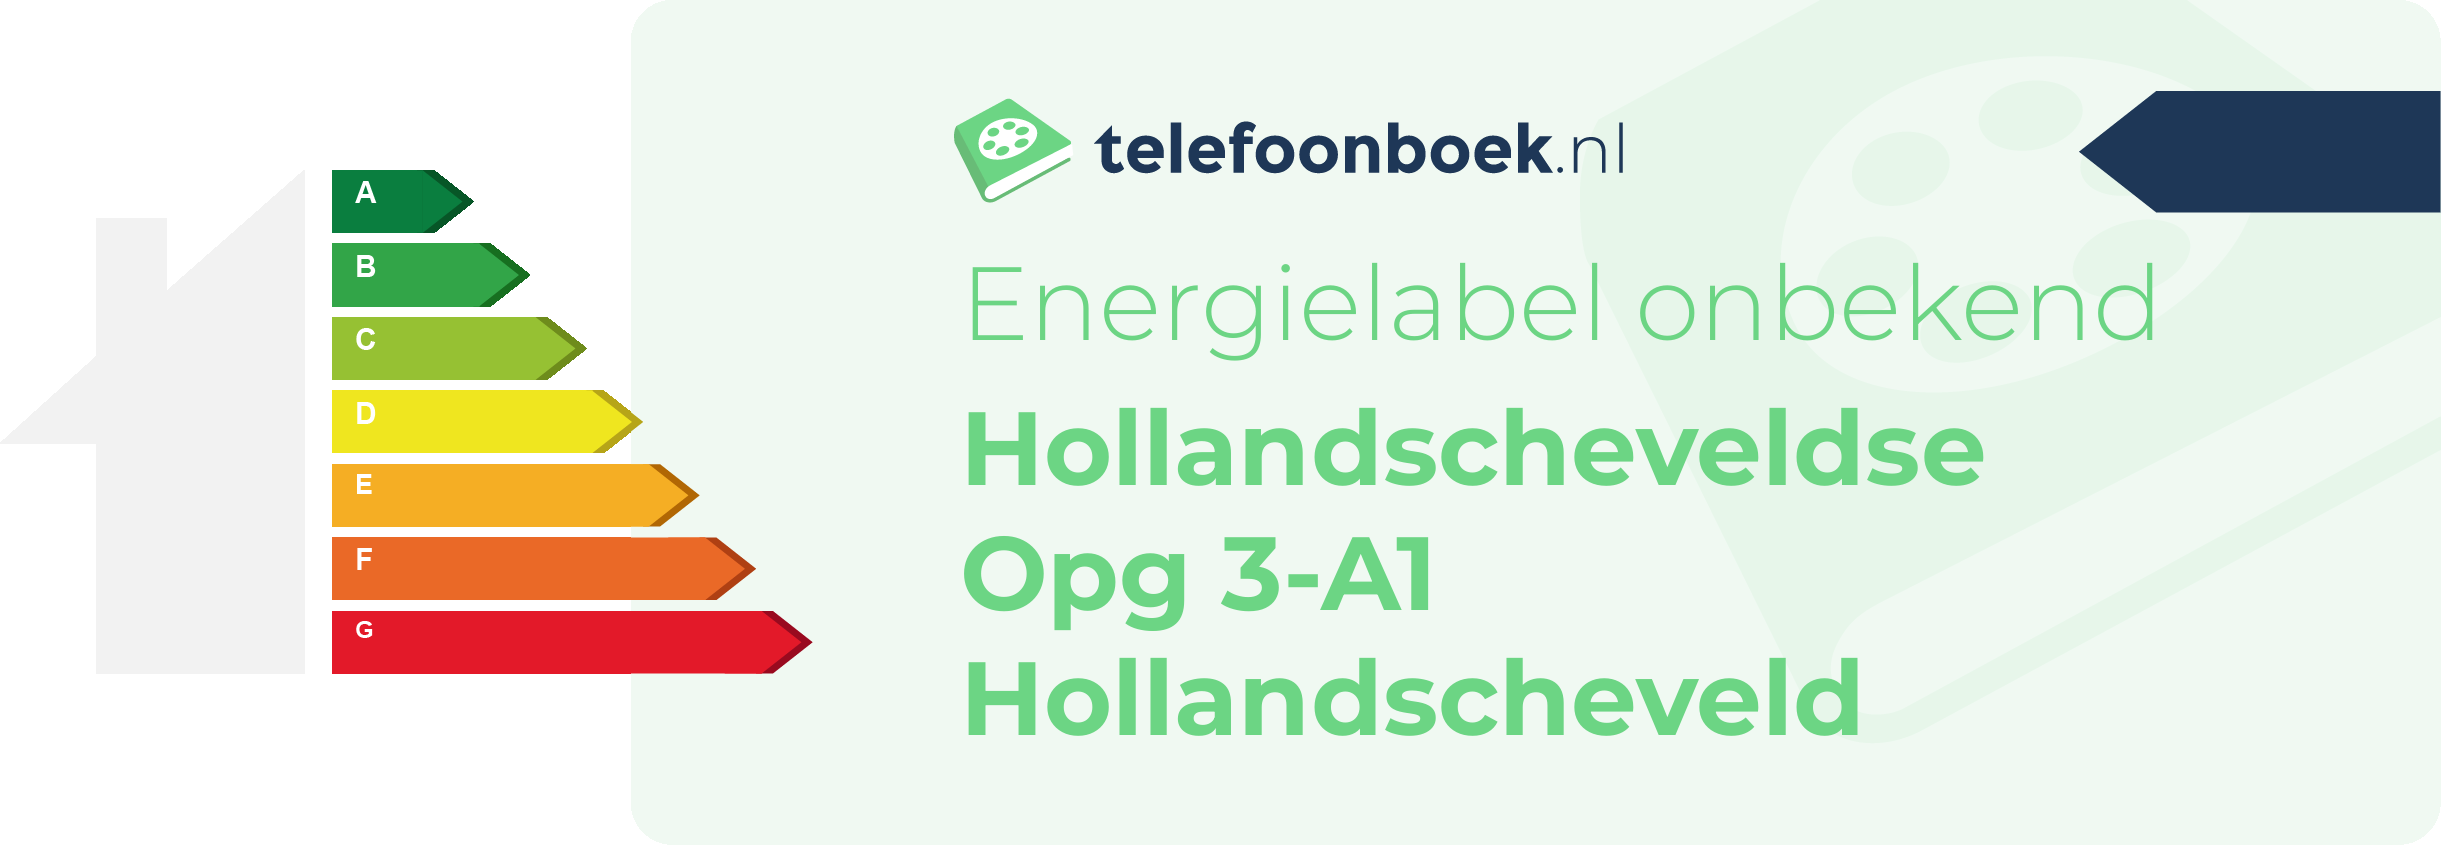 Energielabel Hollandscheveldse Opg 3-A1 Hollandscheveld